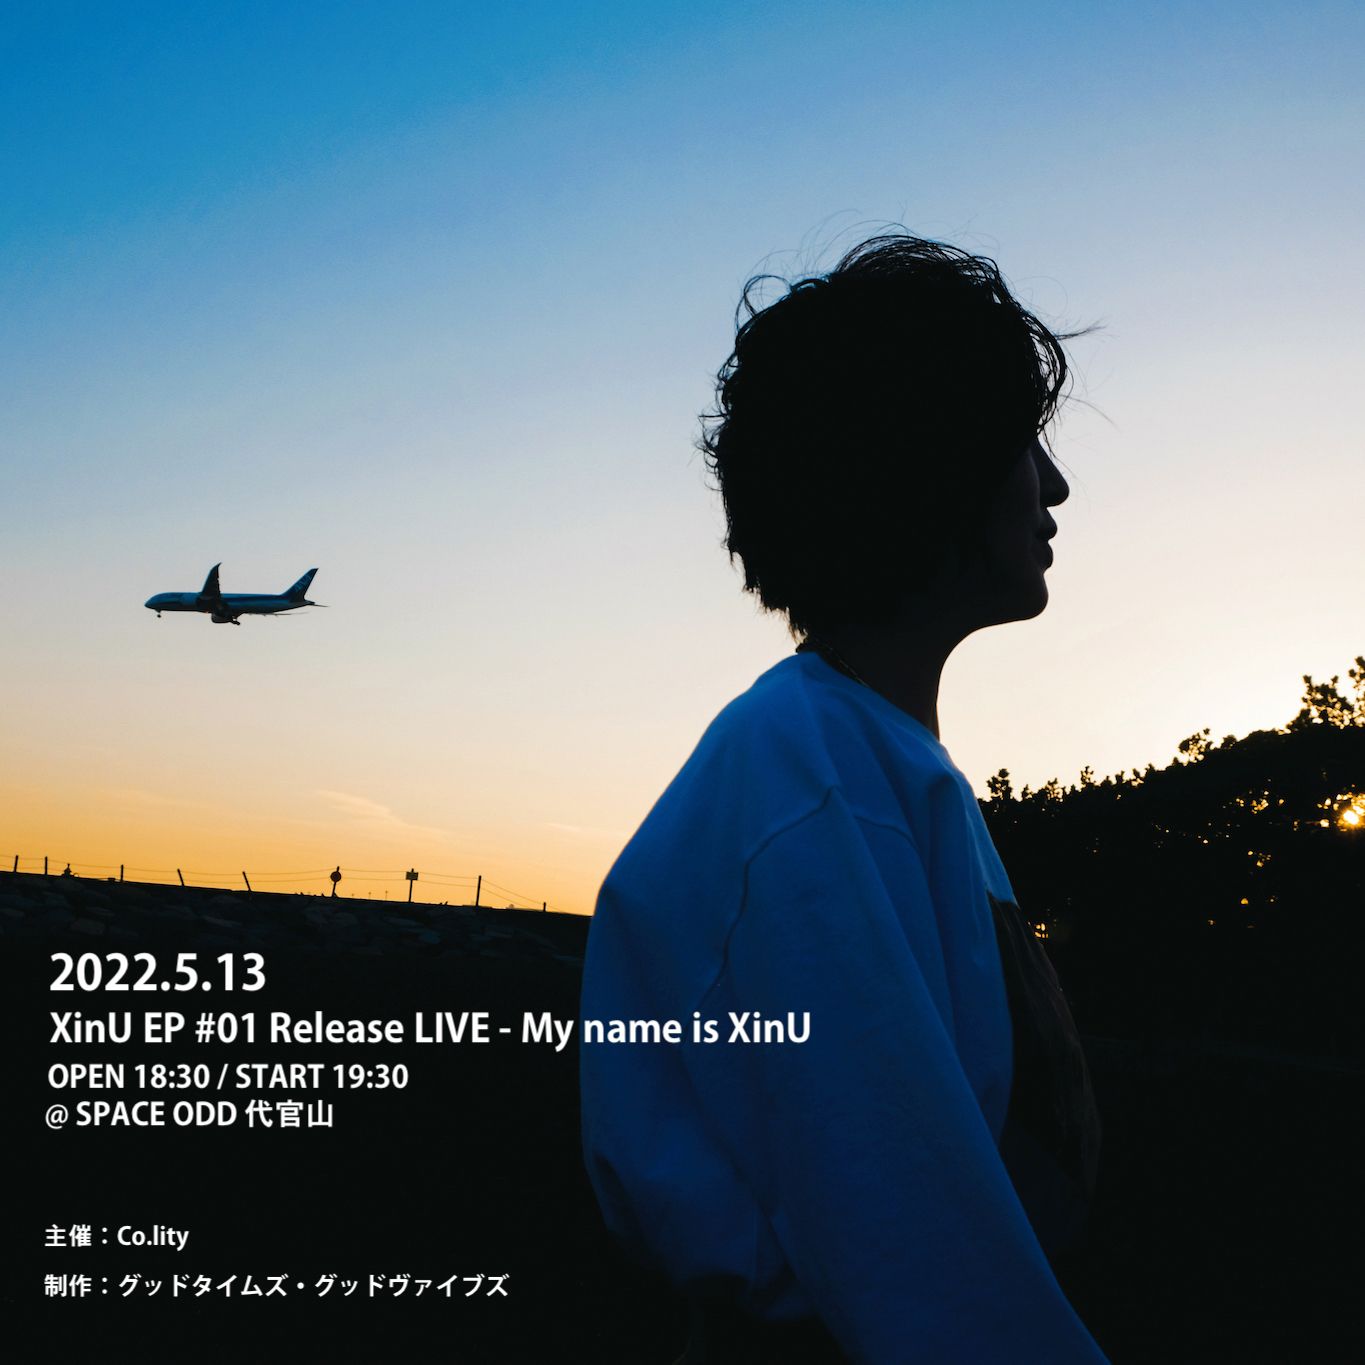 XinU EP #01 Release LIVE - My name is XinU